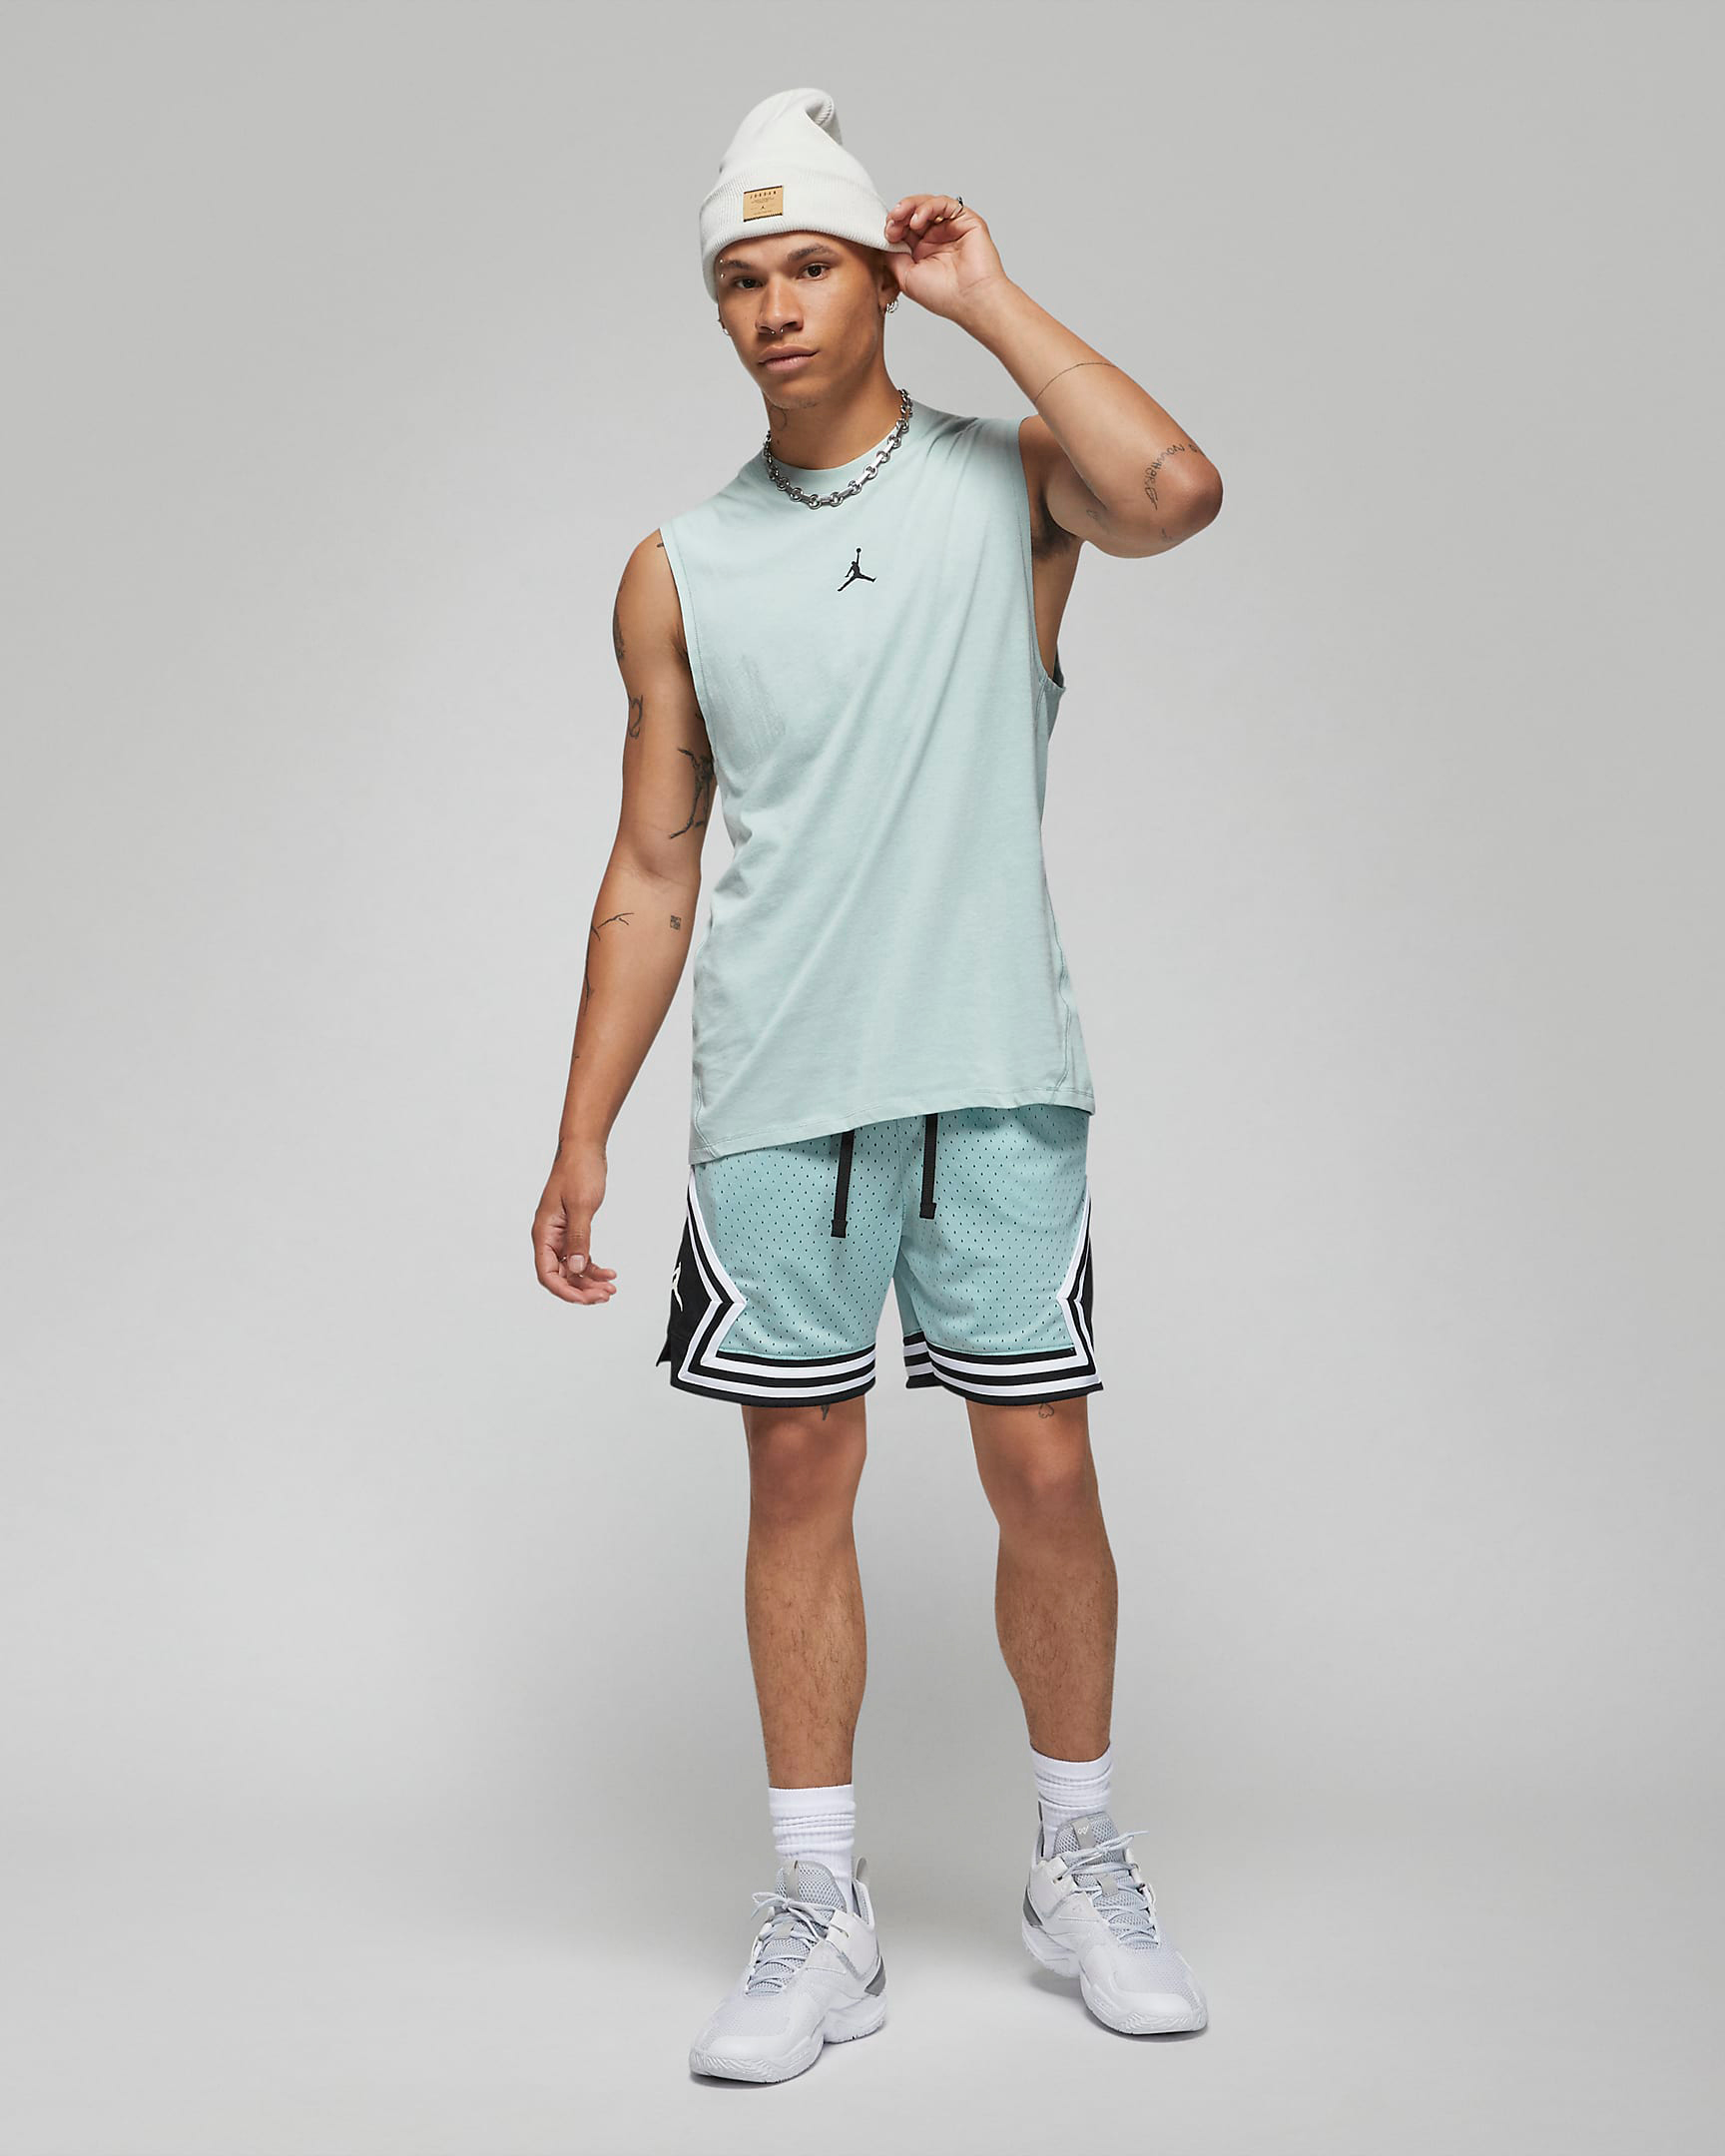 Jordan Ocean Cube Sneaker Shirts Clothing Outfits